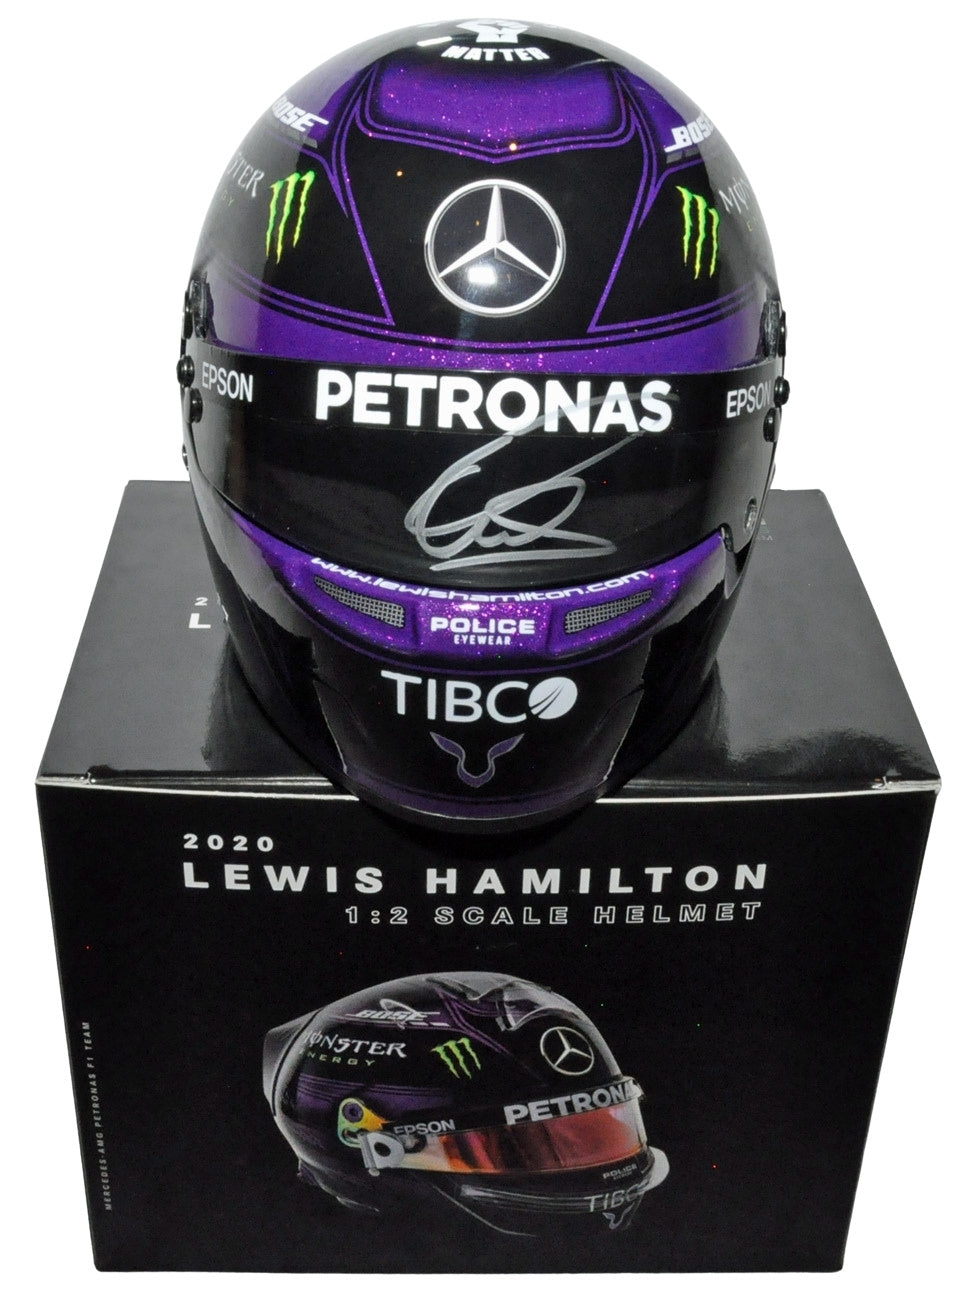 LEWIS HAMILTON Signed HALF SCALE F1 2020 Mercedes Purple REPLICA HELMET